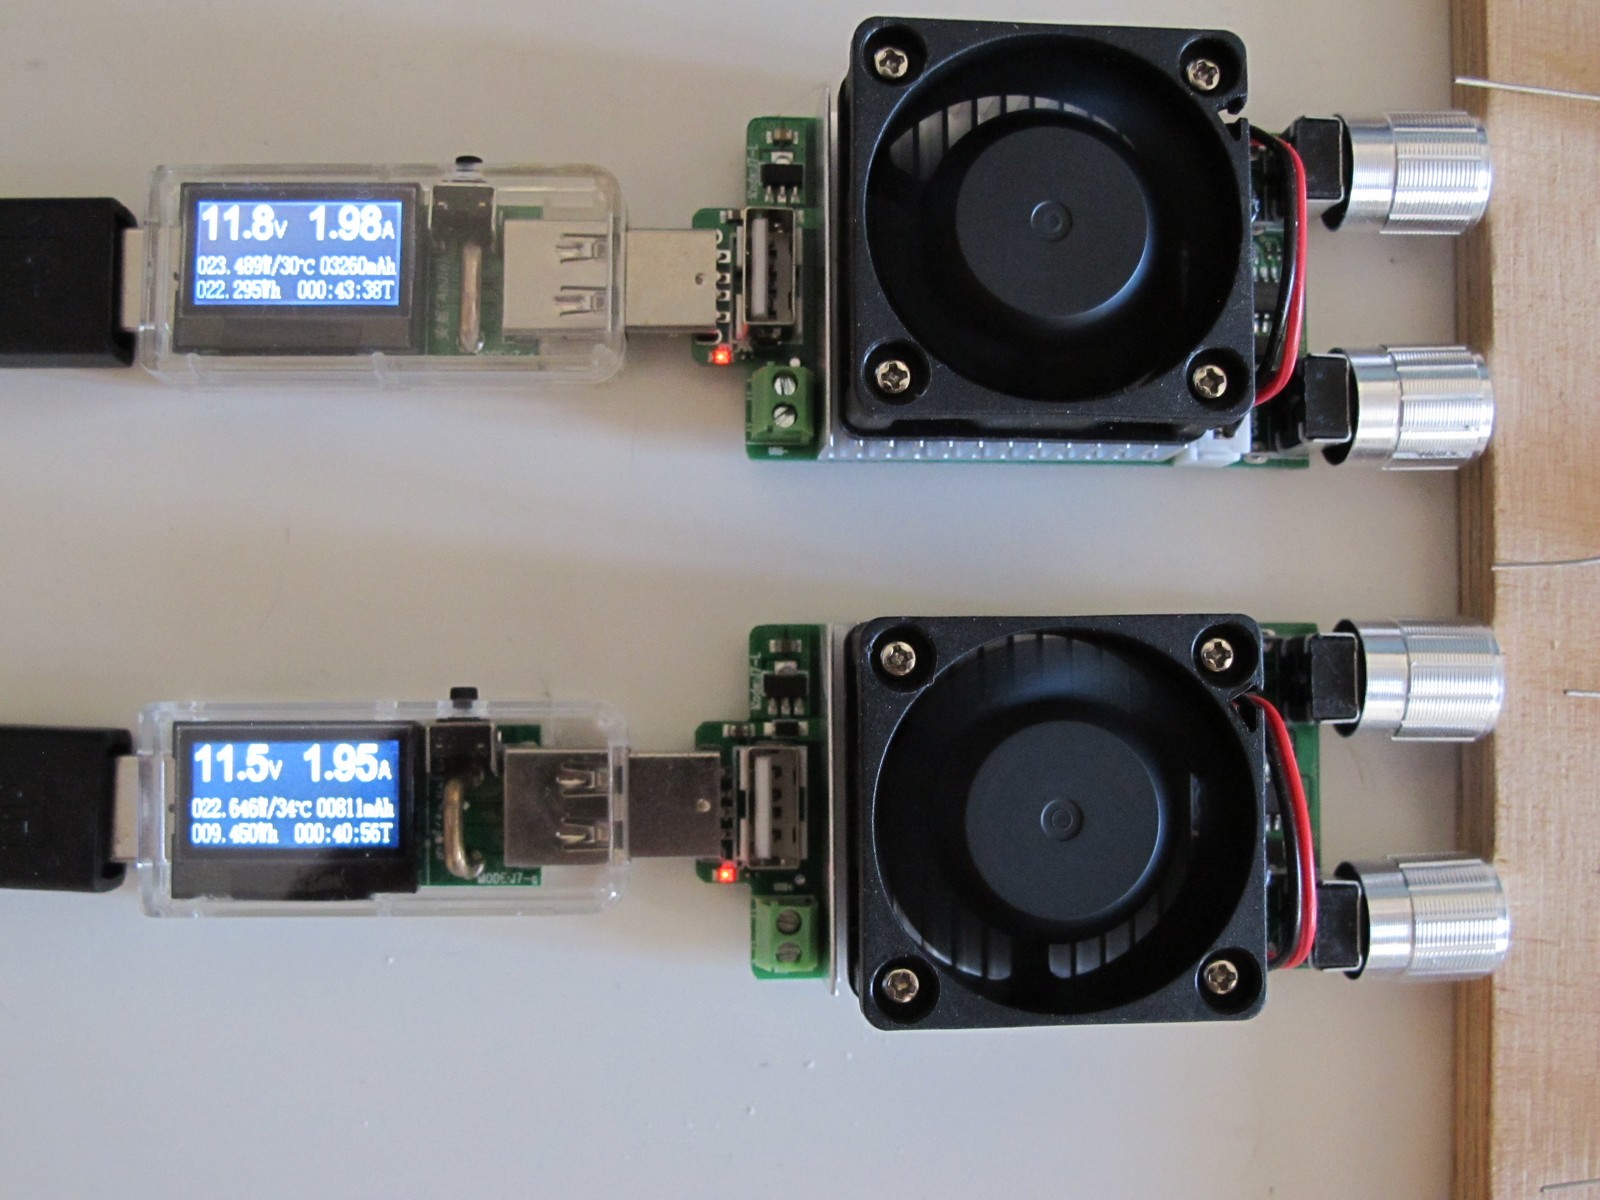 PSU test, USB meter photo